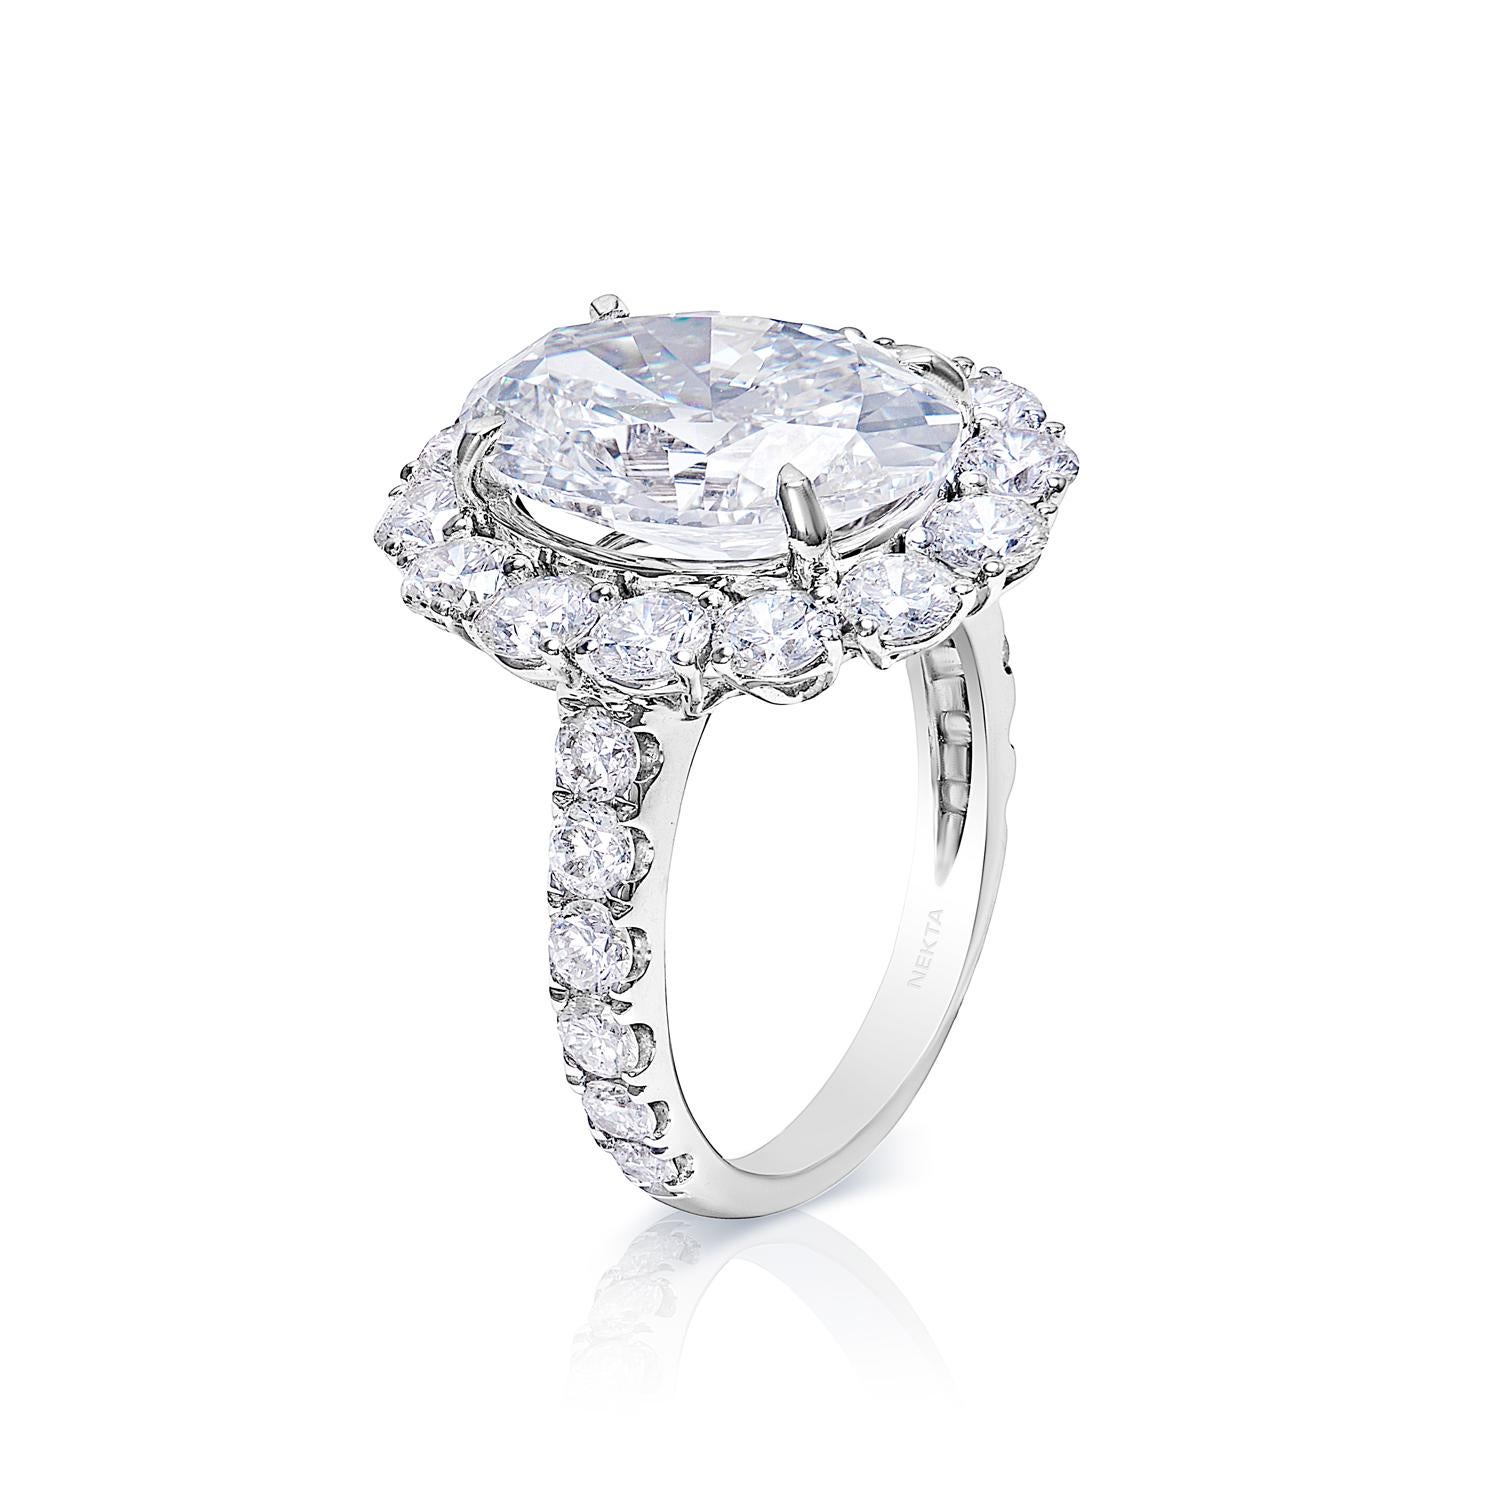 9 carat diamond ring